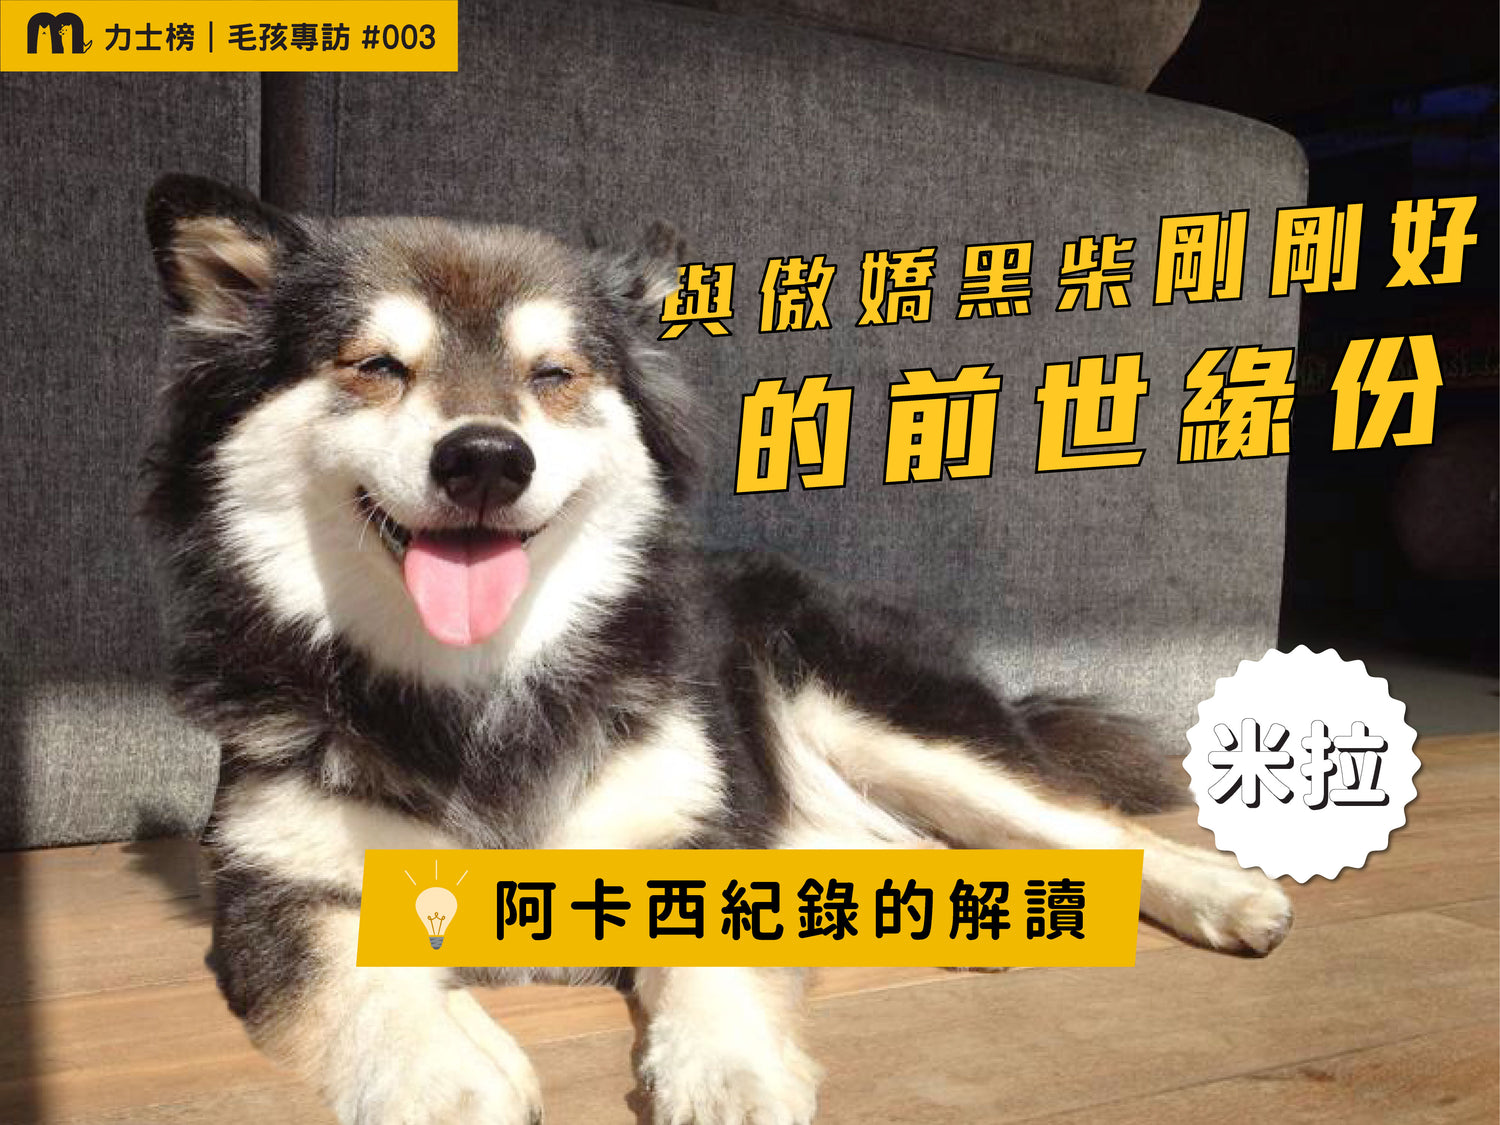 blog1_maolex-dog-cat-pet-food-wetfood-freshfood-catfood-dogfood-dryfeed-Akashic-Shiba Inu-black shiba inu-dog communication-pet communication-prototype food-dog slave